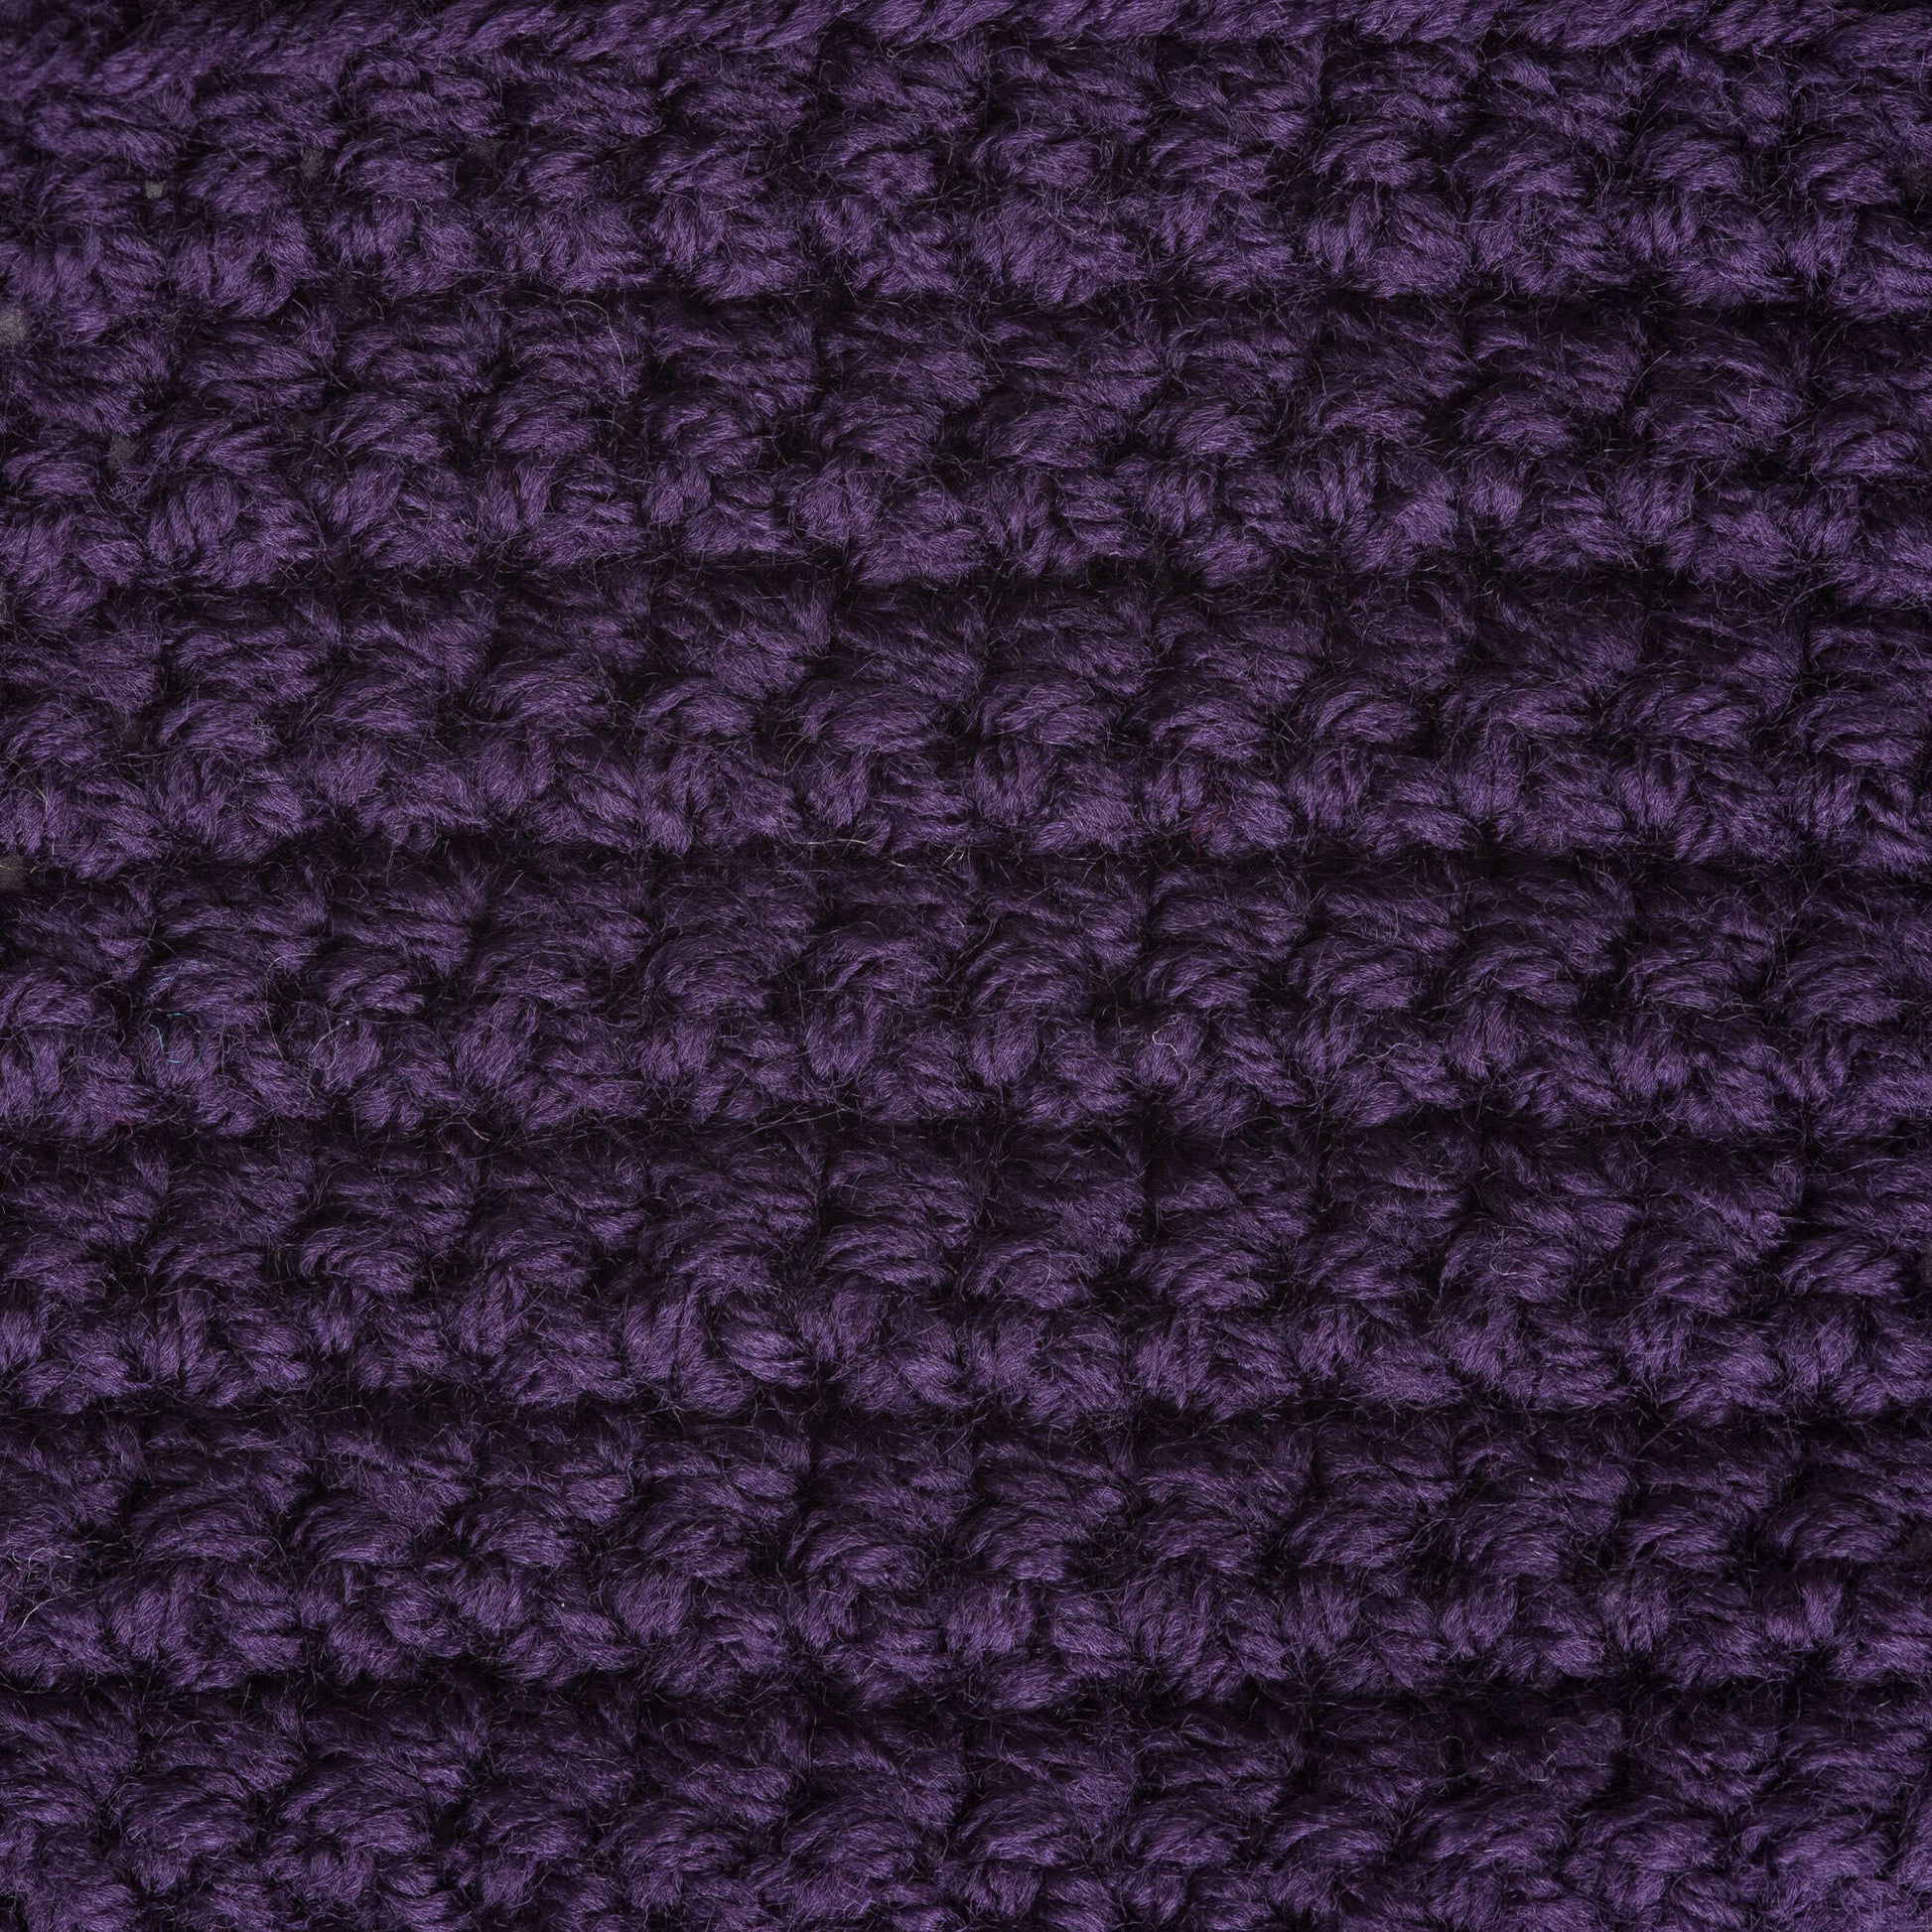 Bernat Premium Yarn Purple